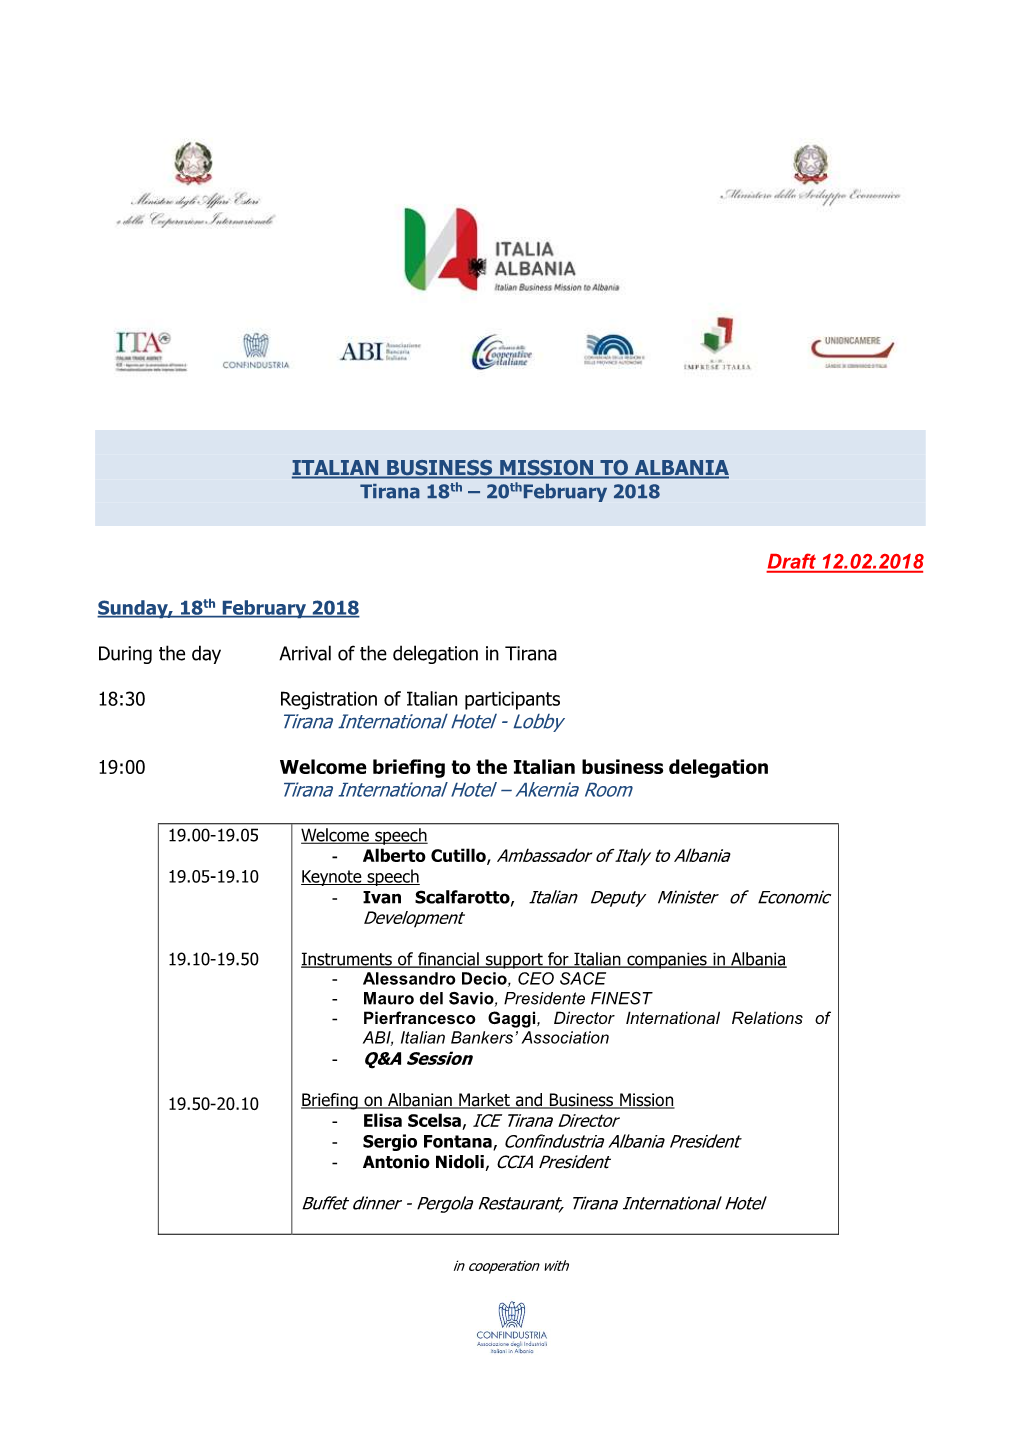 ITALIAN BUSINESS MISSION to ALBANIA Draft 12.02.2018